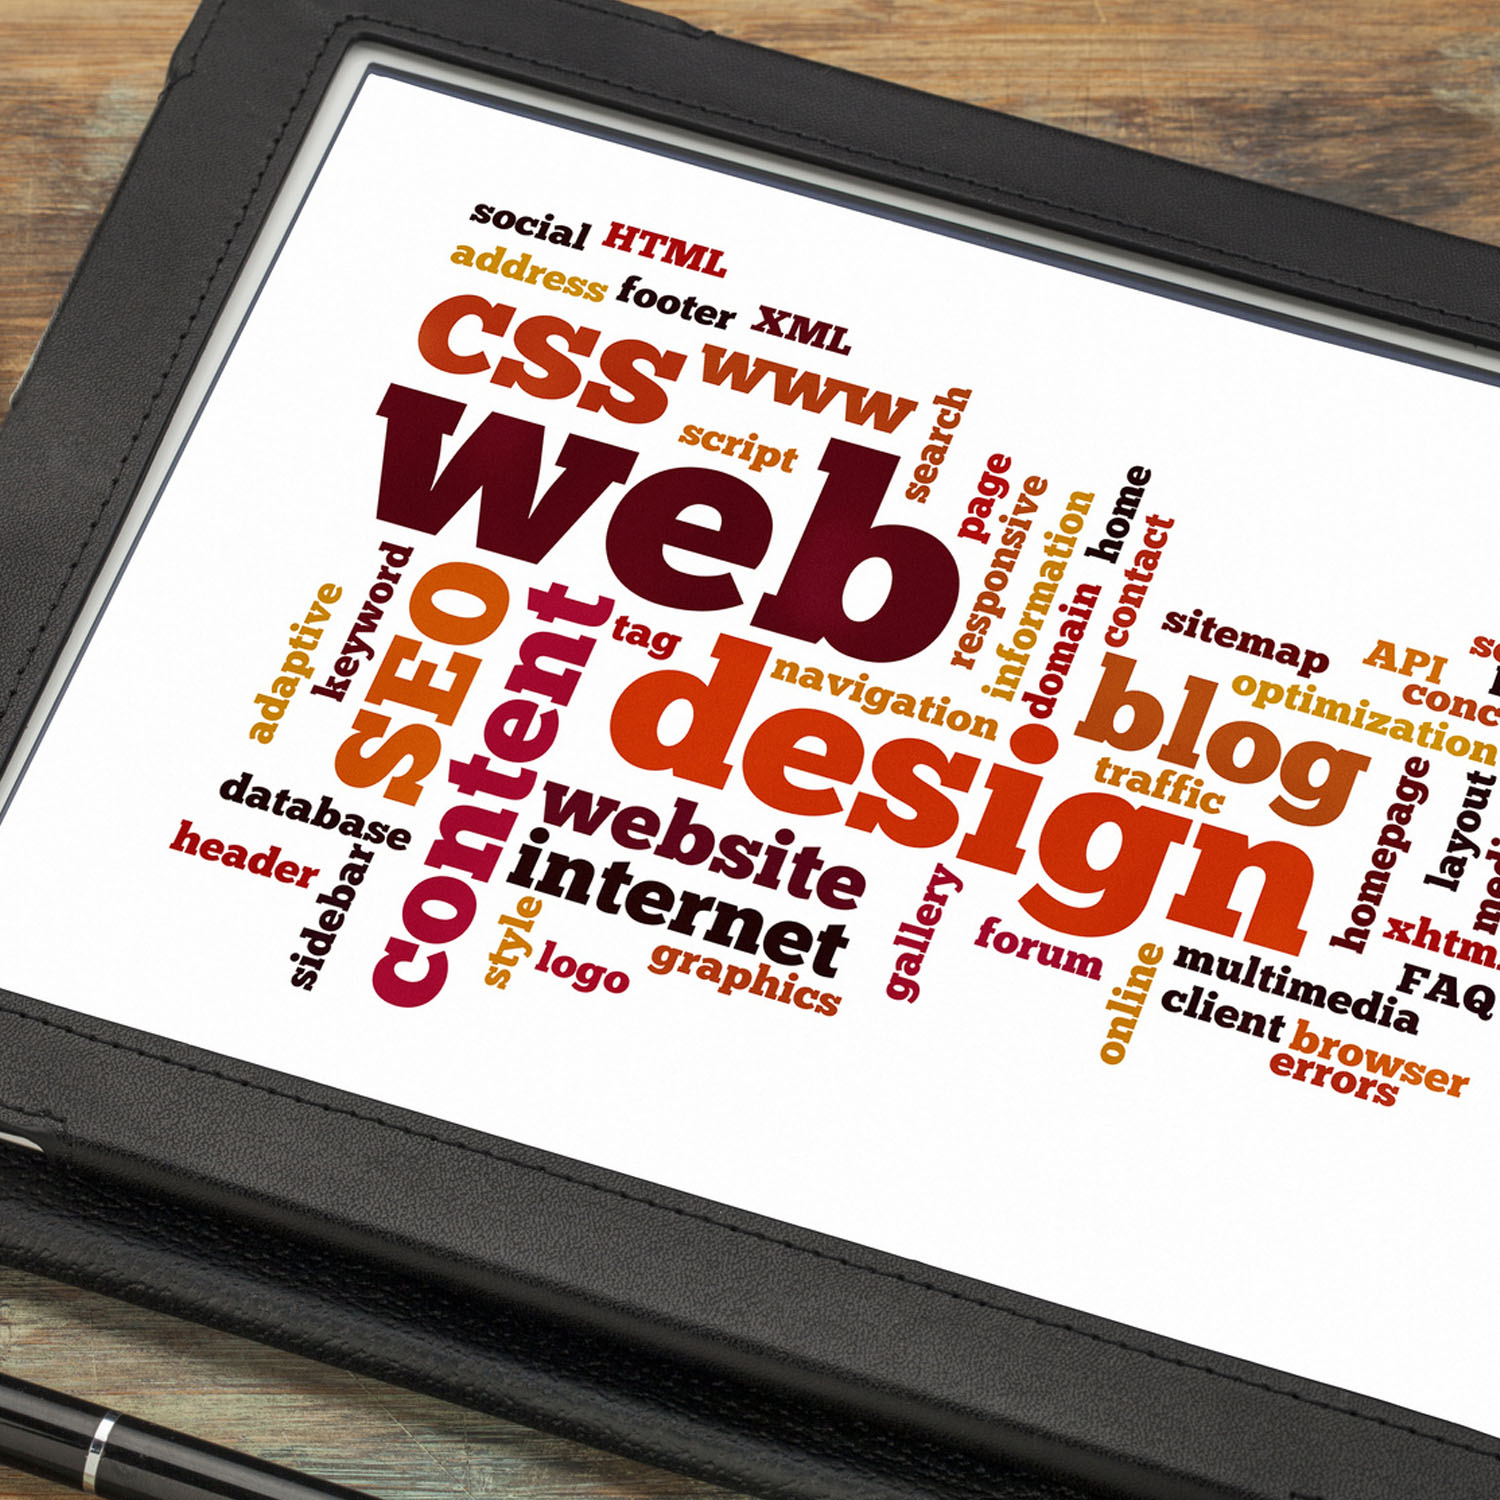 Web design word